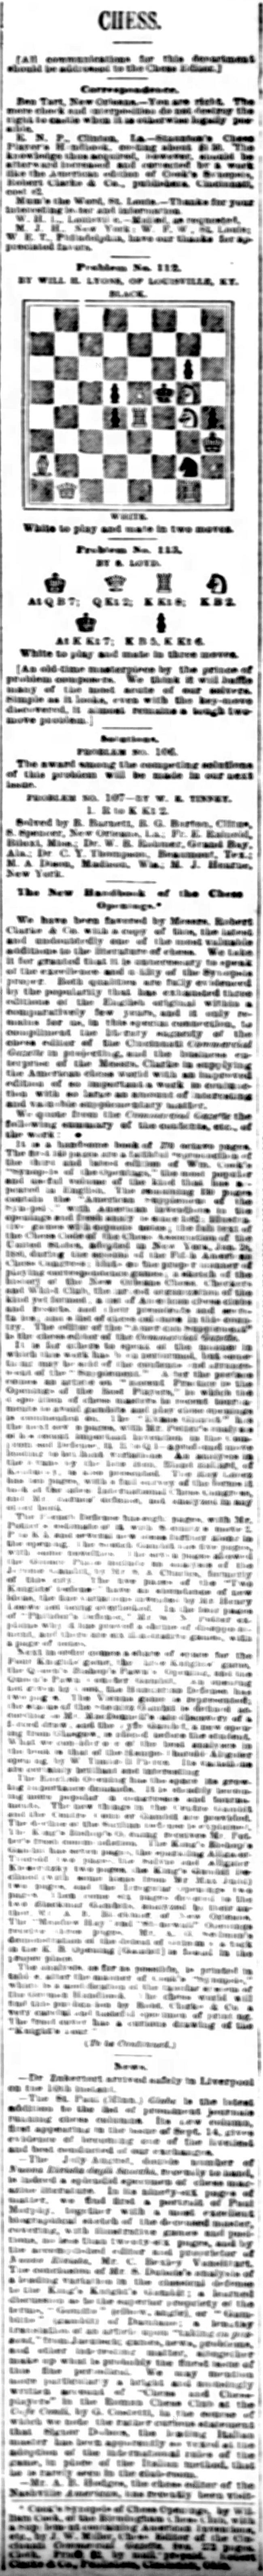 1884.09.28-01 New Orleans Times-Democrat.jpg